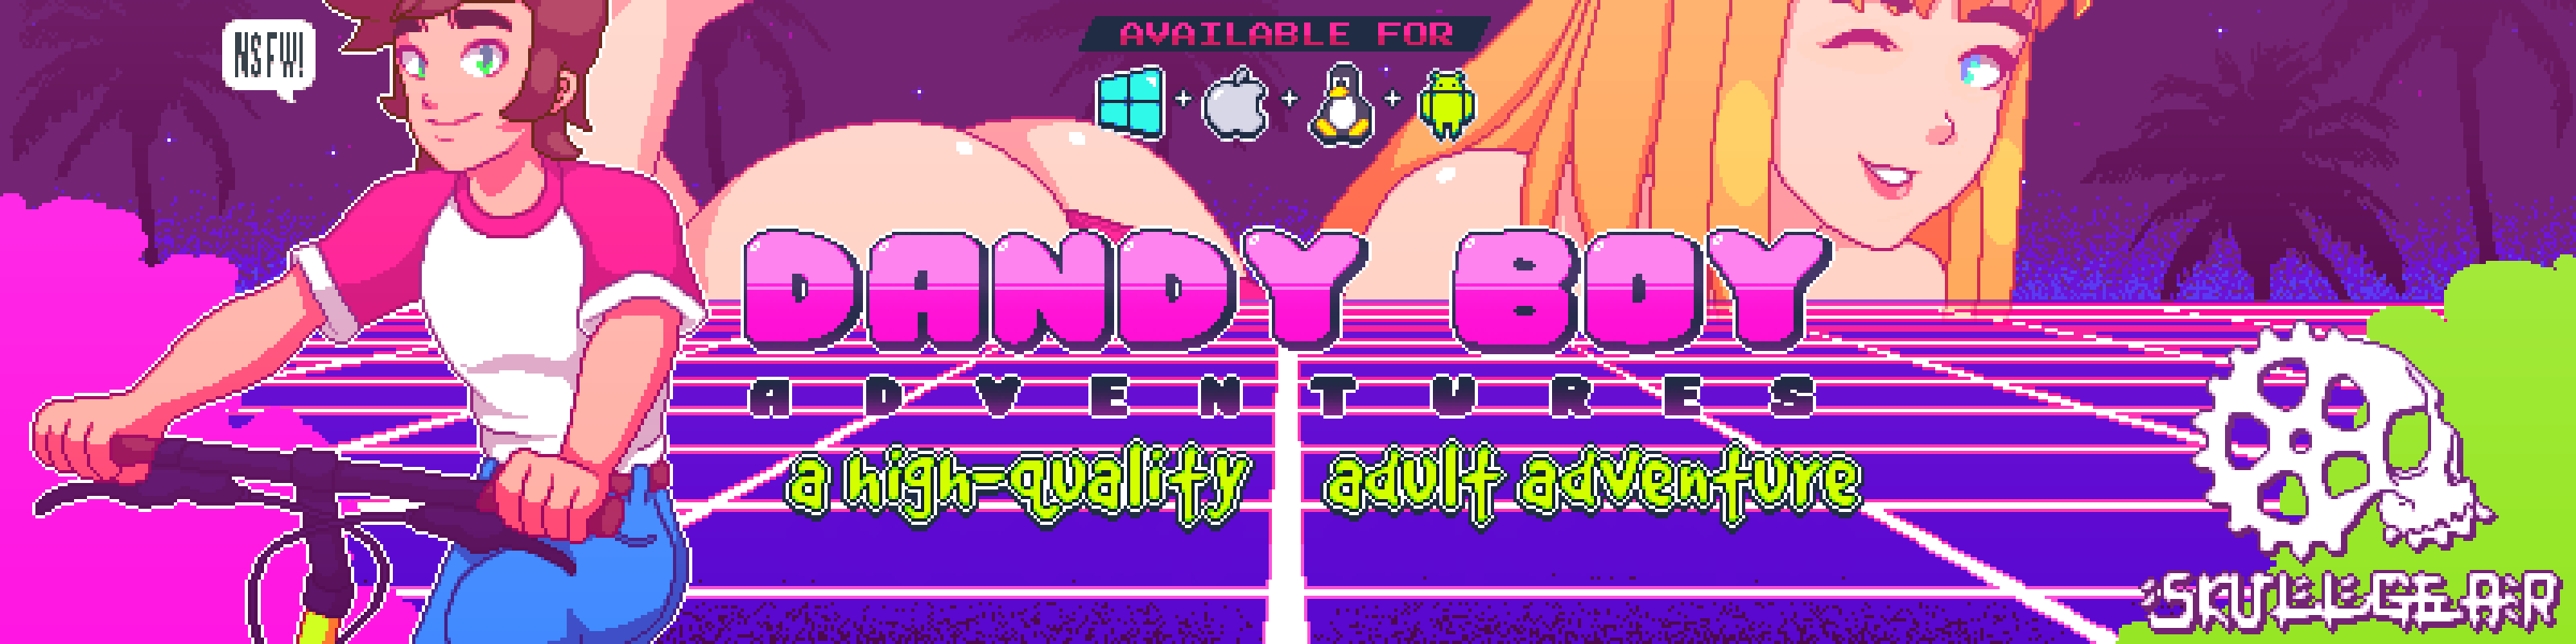 Dandy boy adventures download